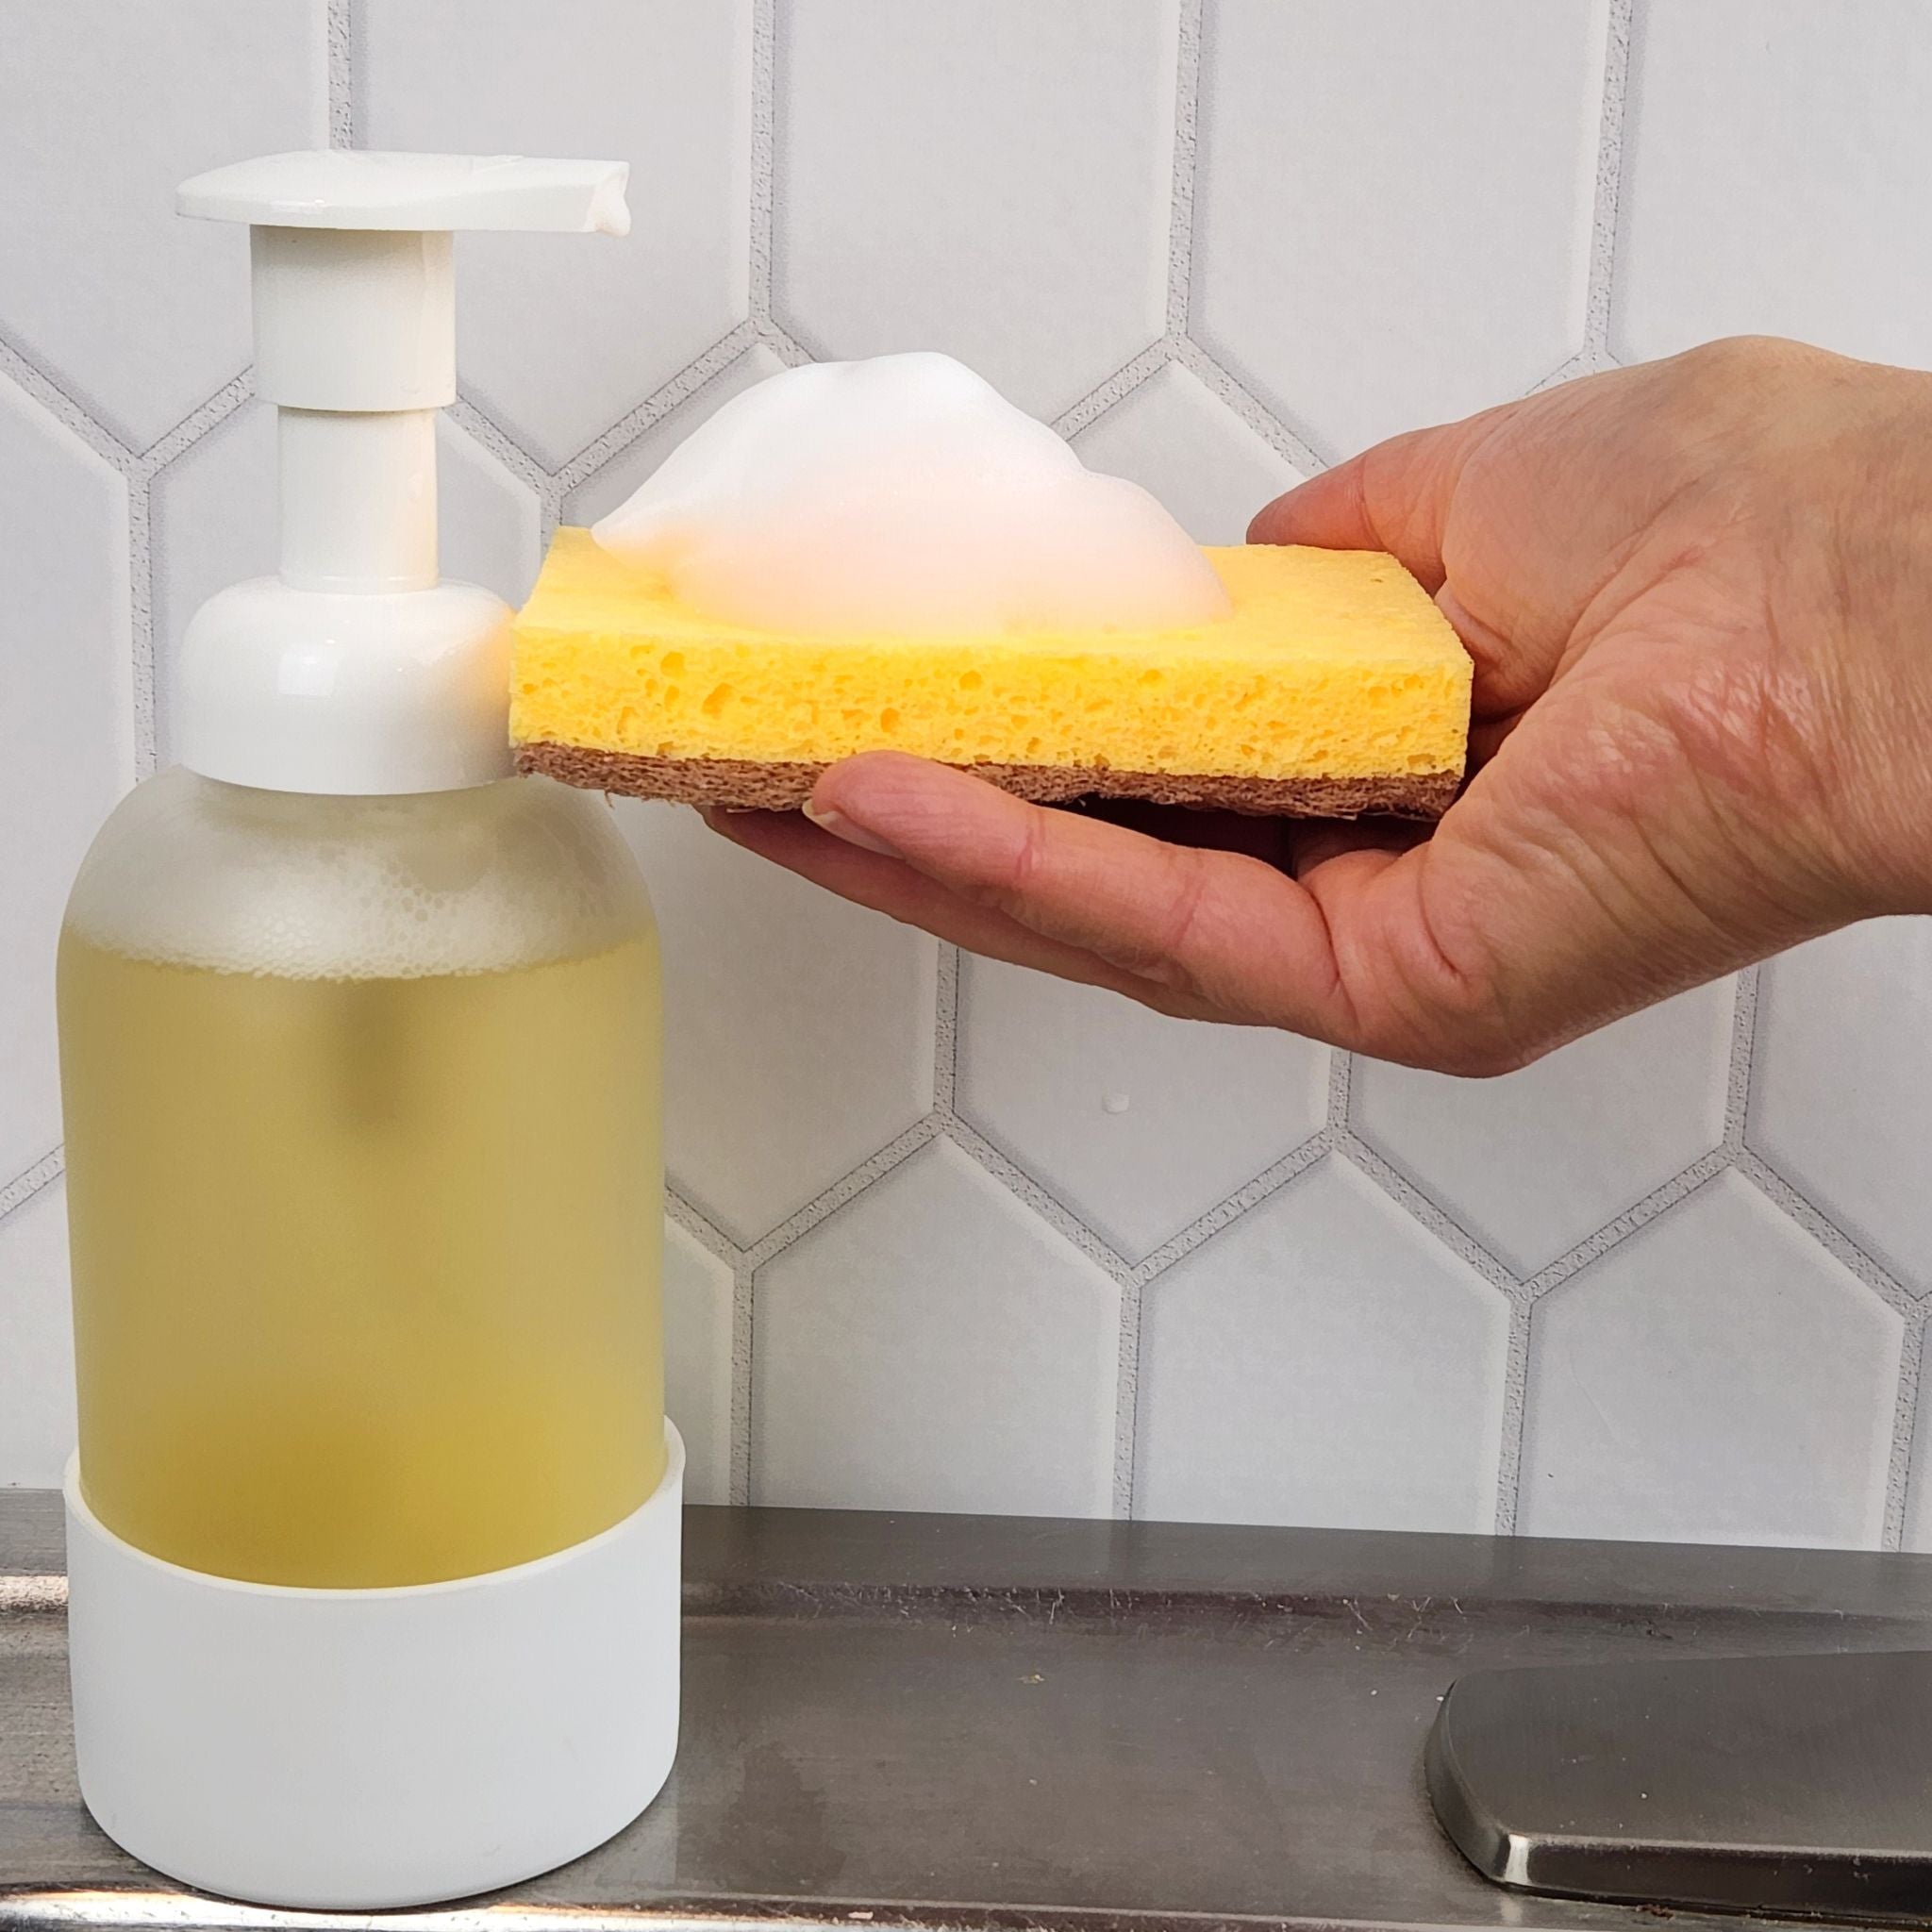 Organic Foaming Dish Soap - MADE OF